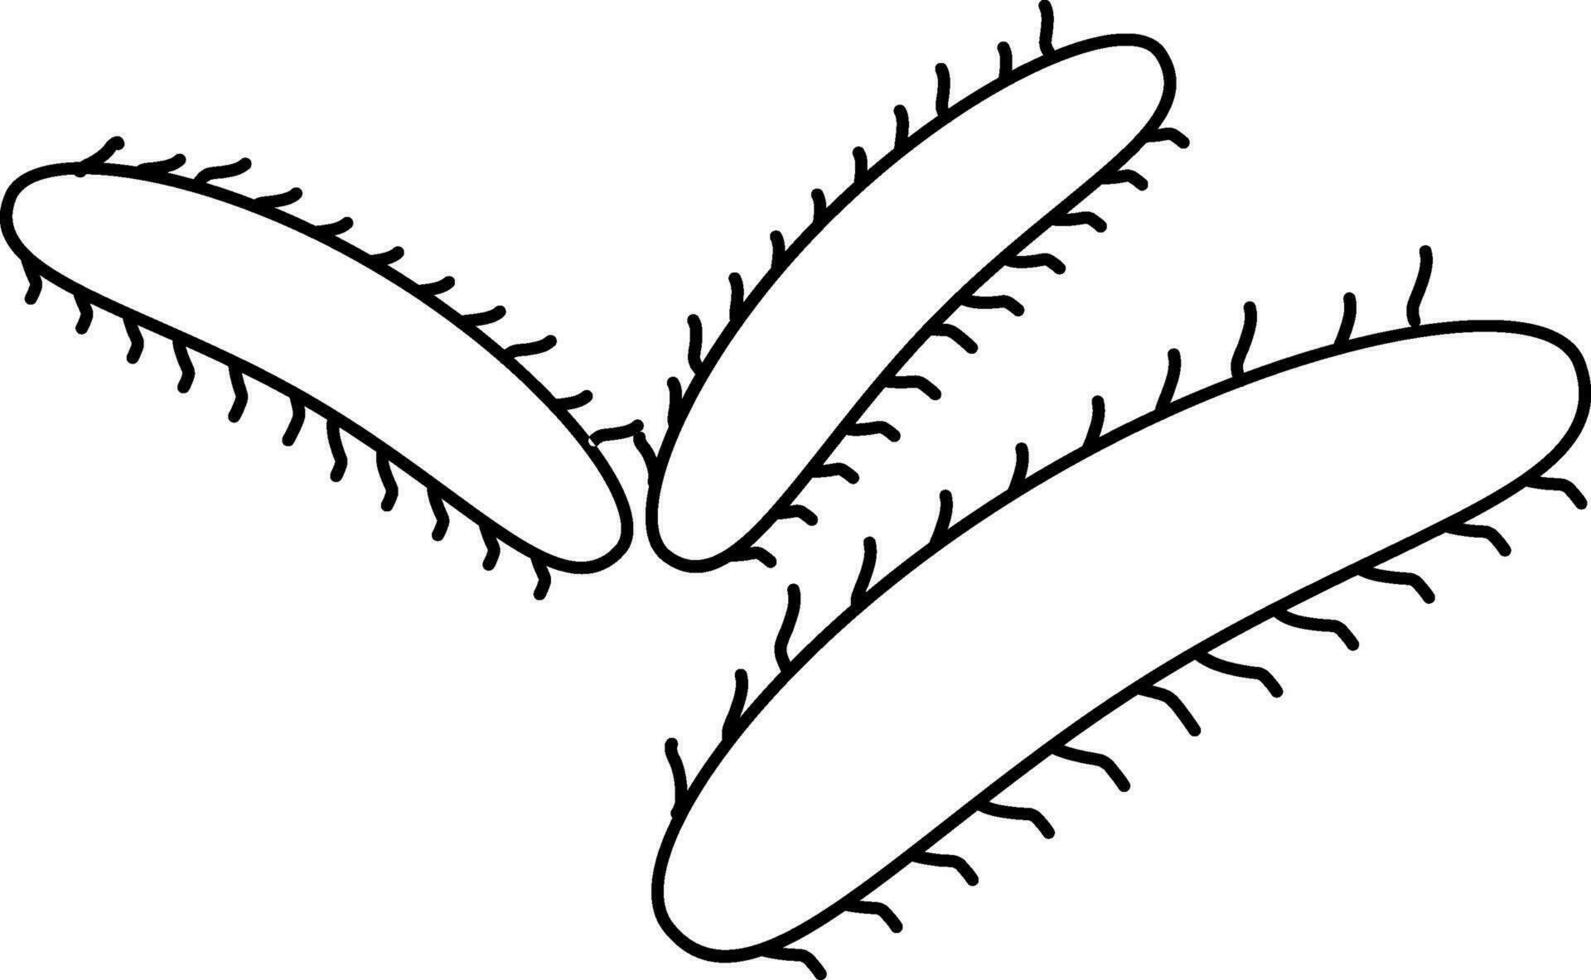 Symbol of three bacteria icon in stroke style. vector